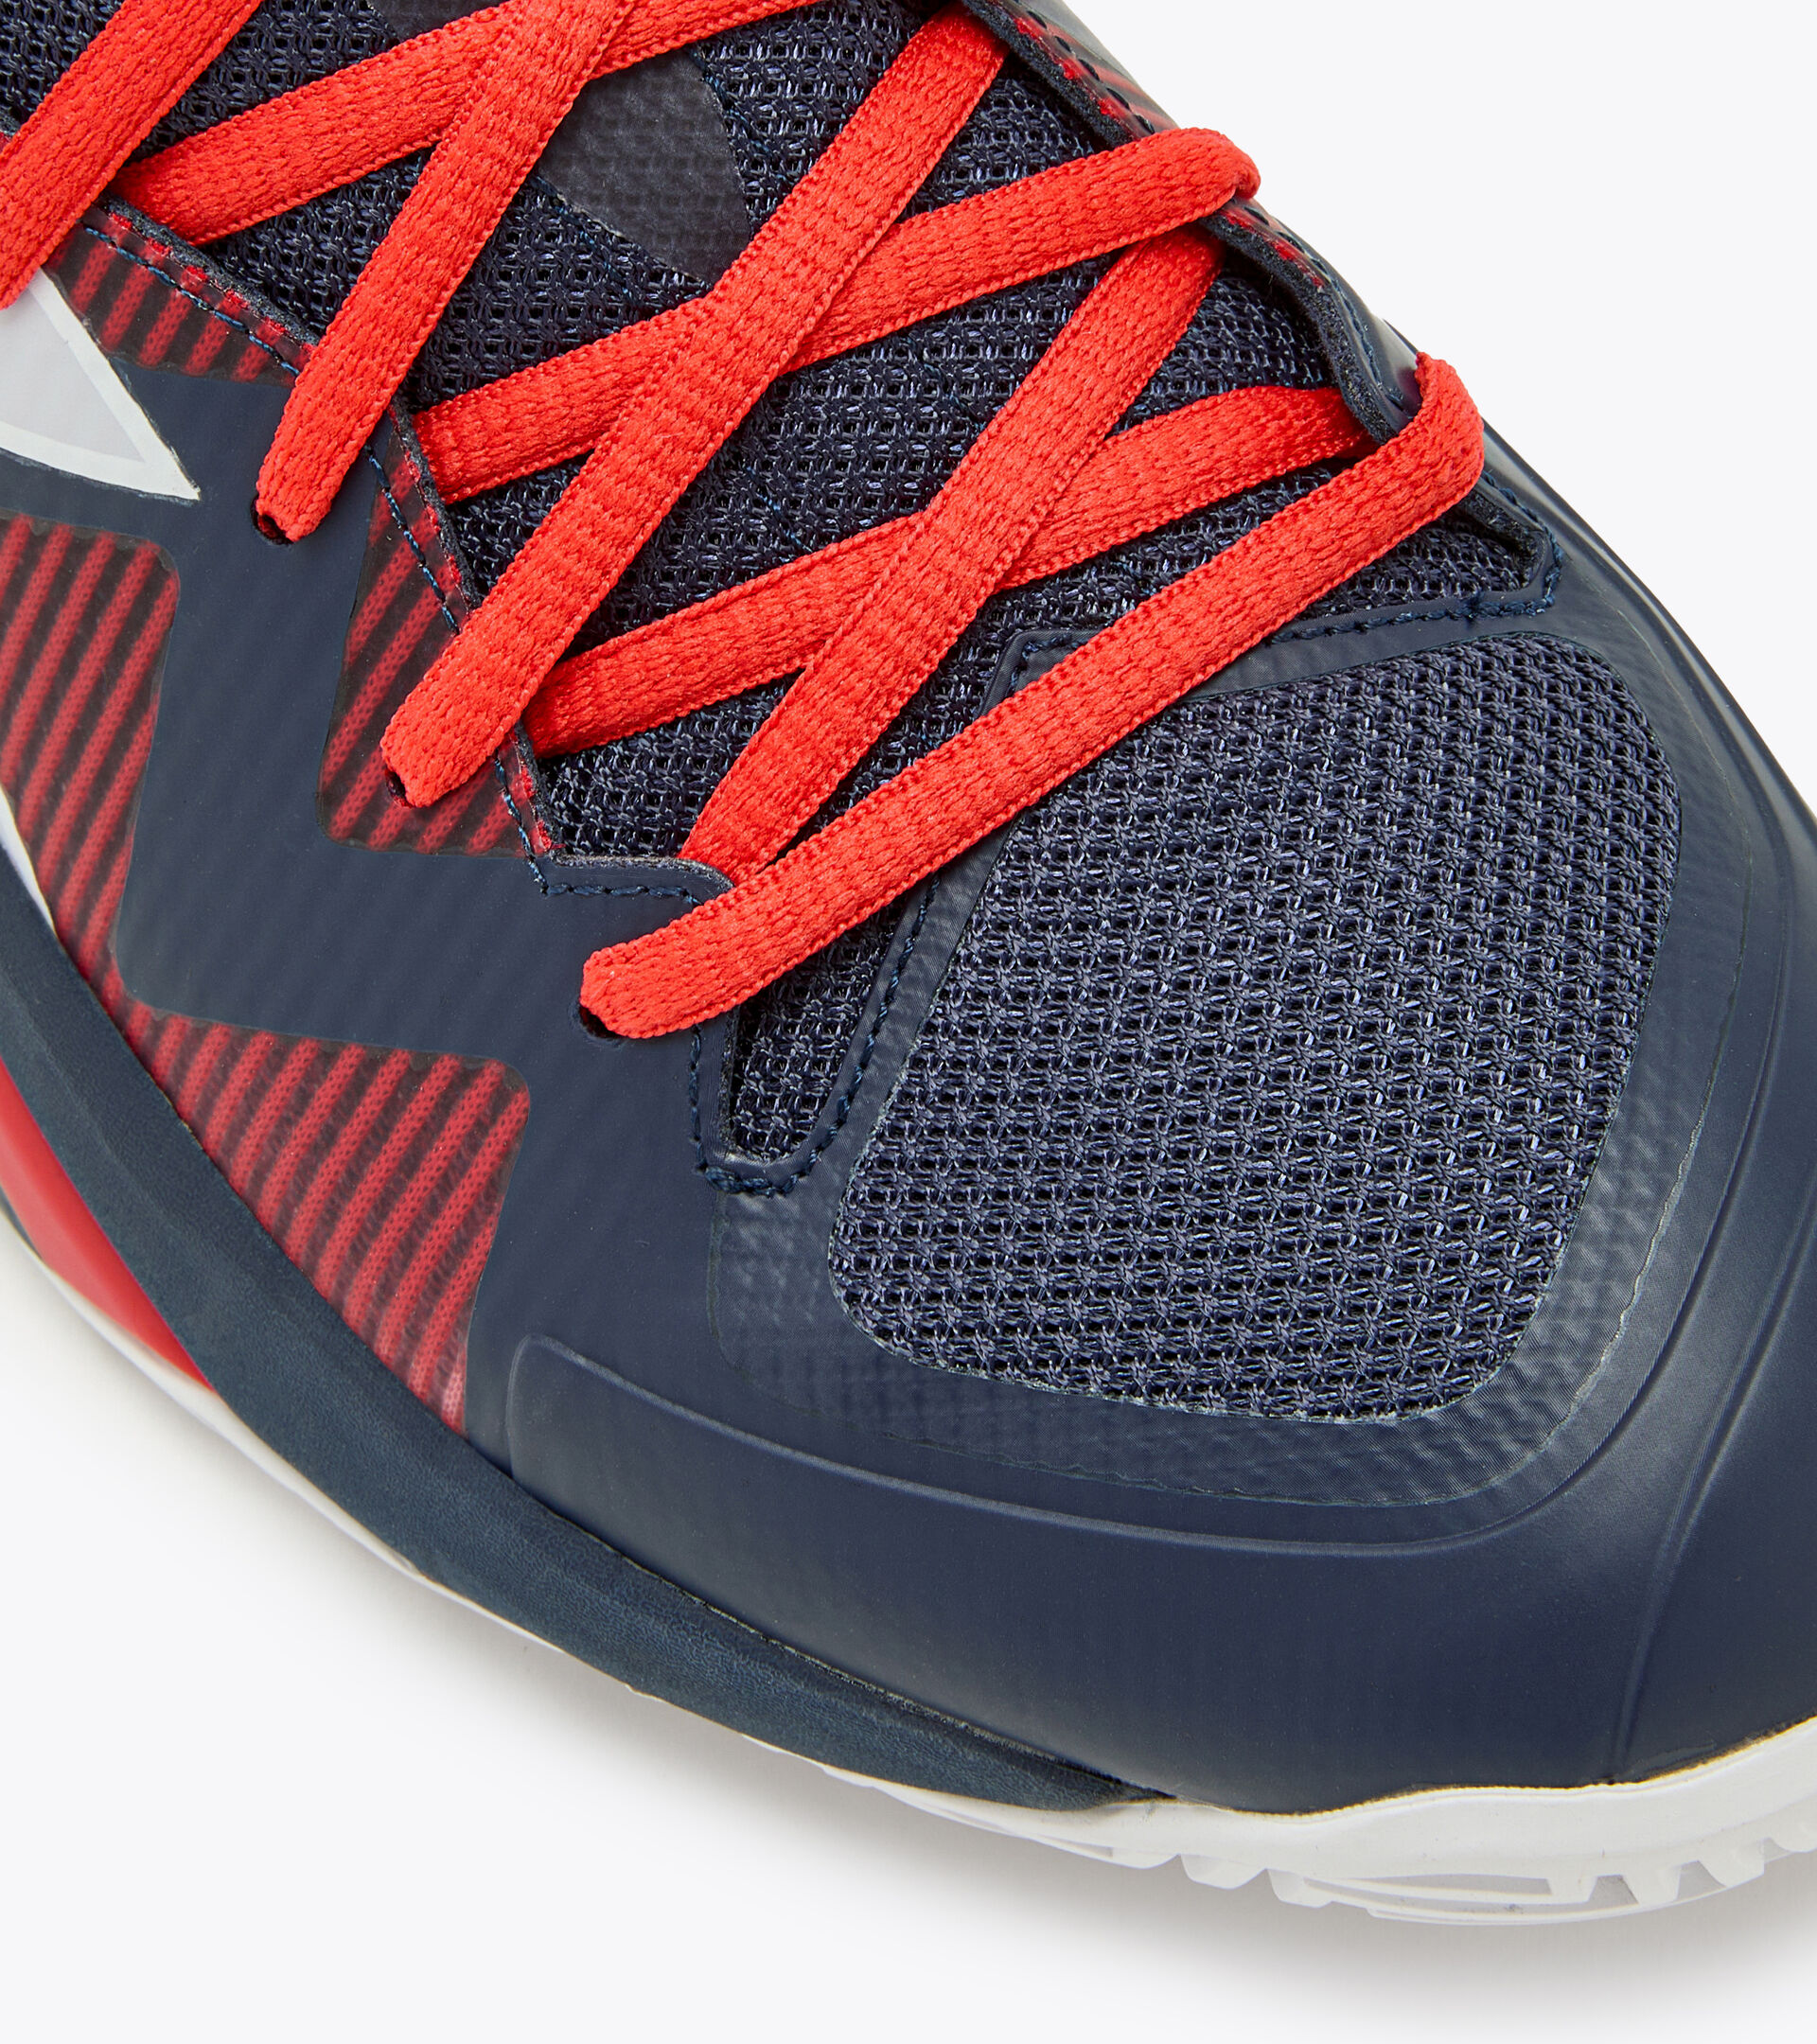 Tennis shoes for hard surfaces or clay - Men B.ICON 2 AG BLUE CORSAIR/WHITE/FIERY RED - Diadora